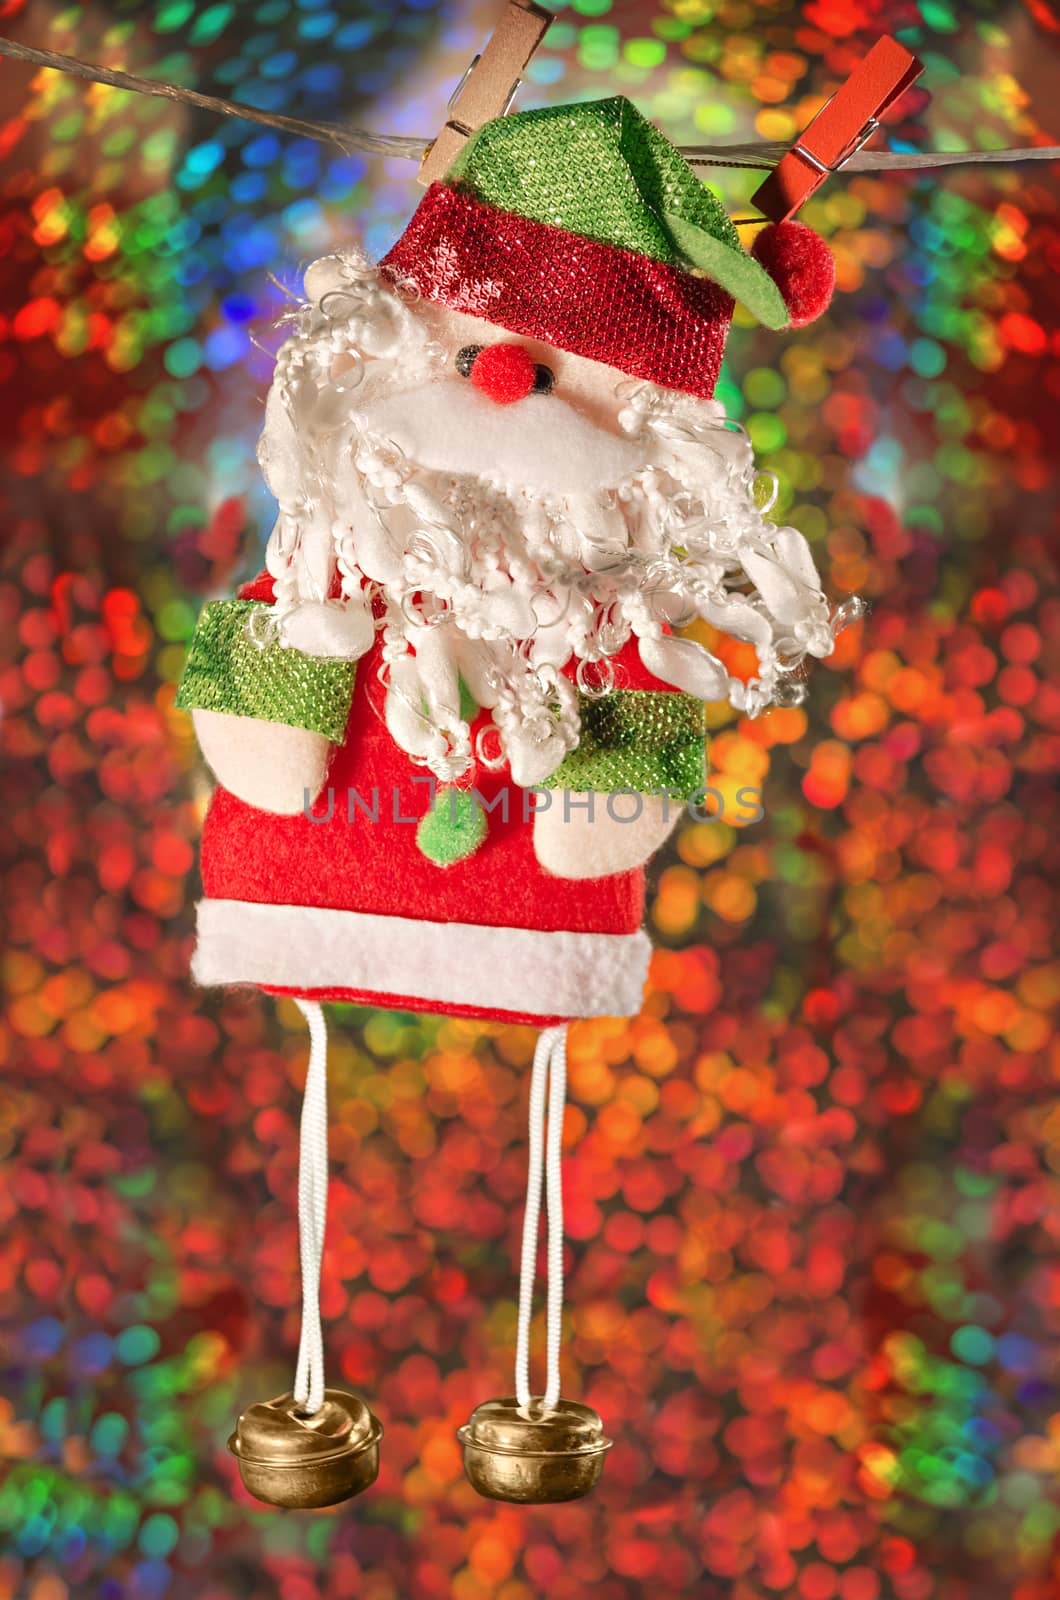 Santa Claus, holiday background bokeh. Christmas decorations hanging